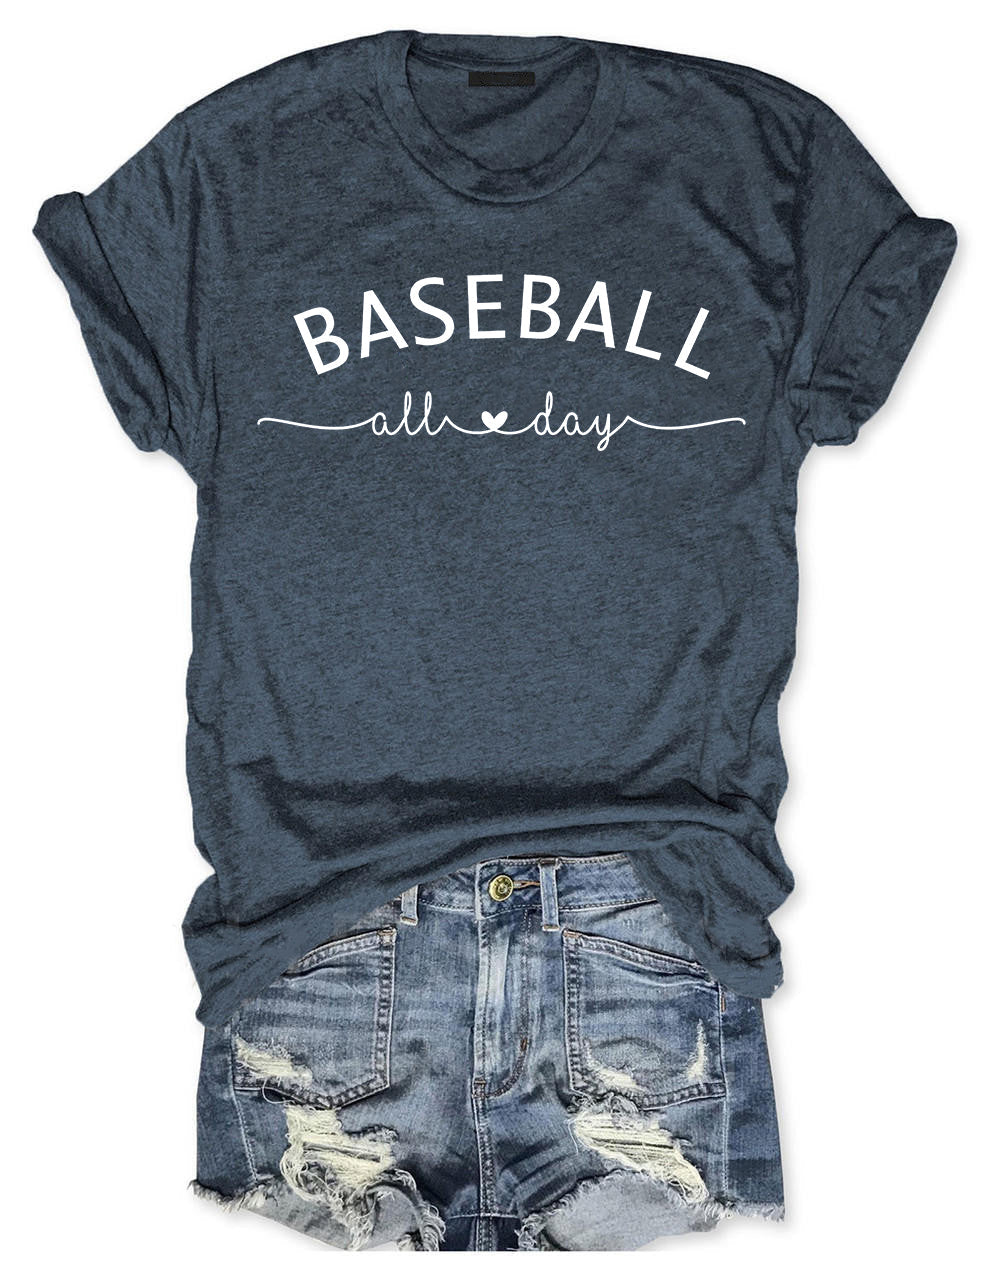 Baseball All Day T-shirt